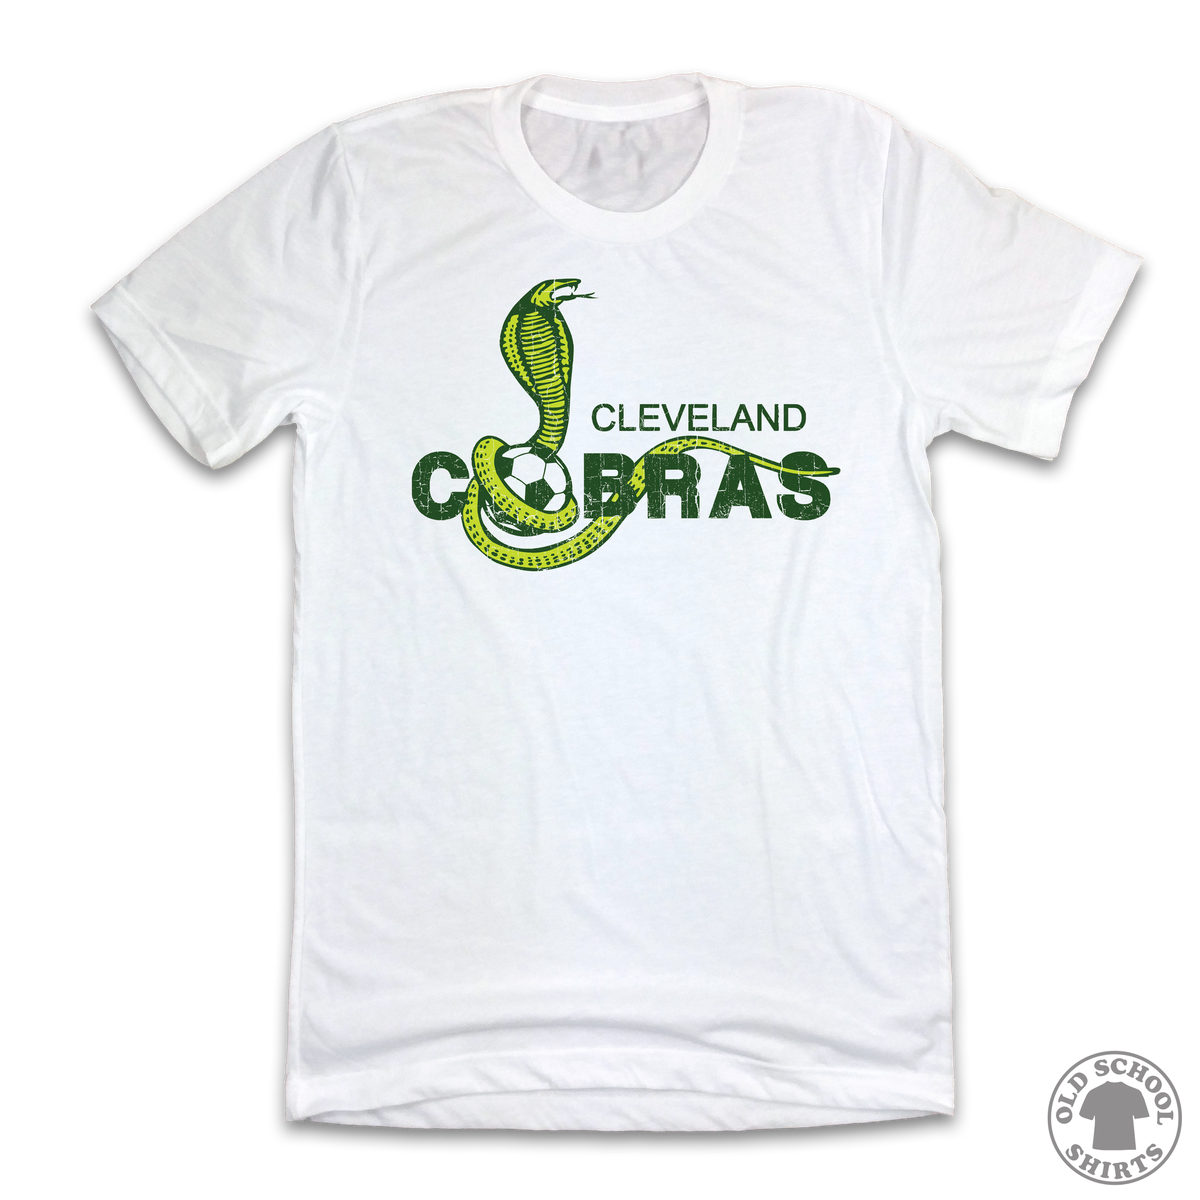 Cleveland Cobras - Old School Shirts- Retro Sports T Shirts